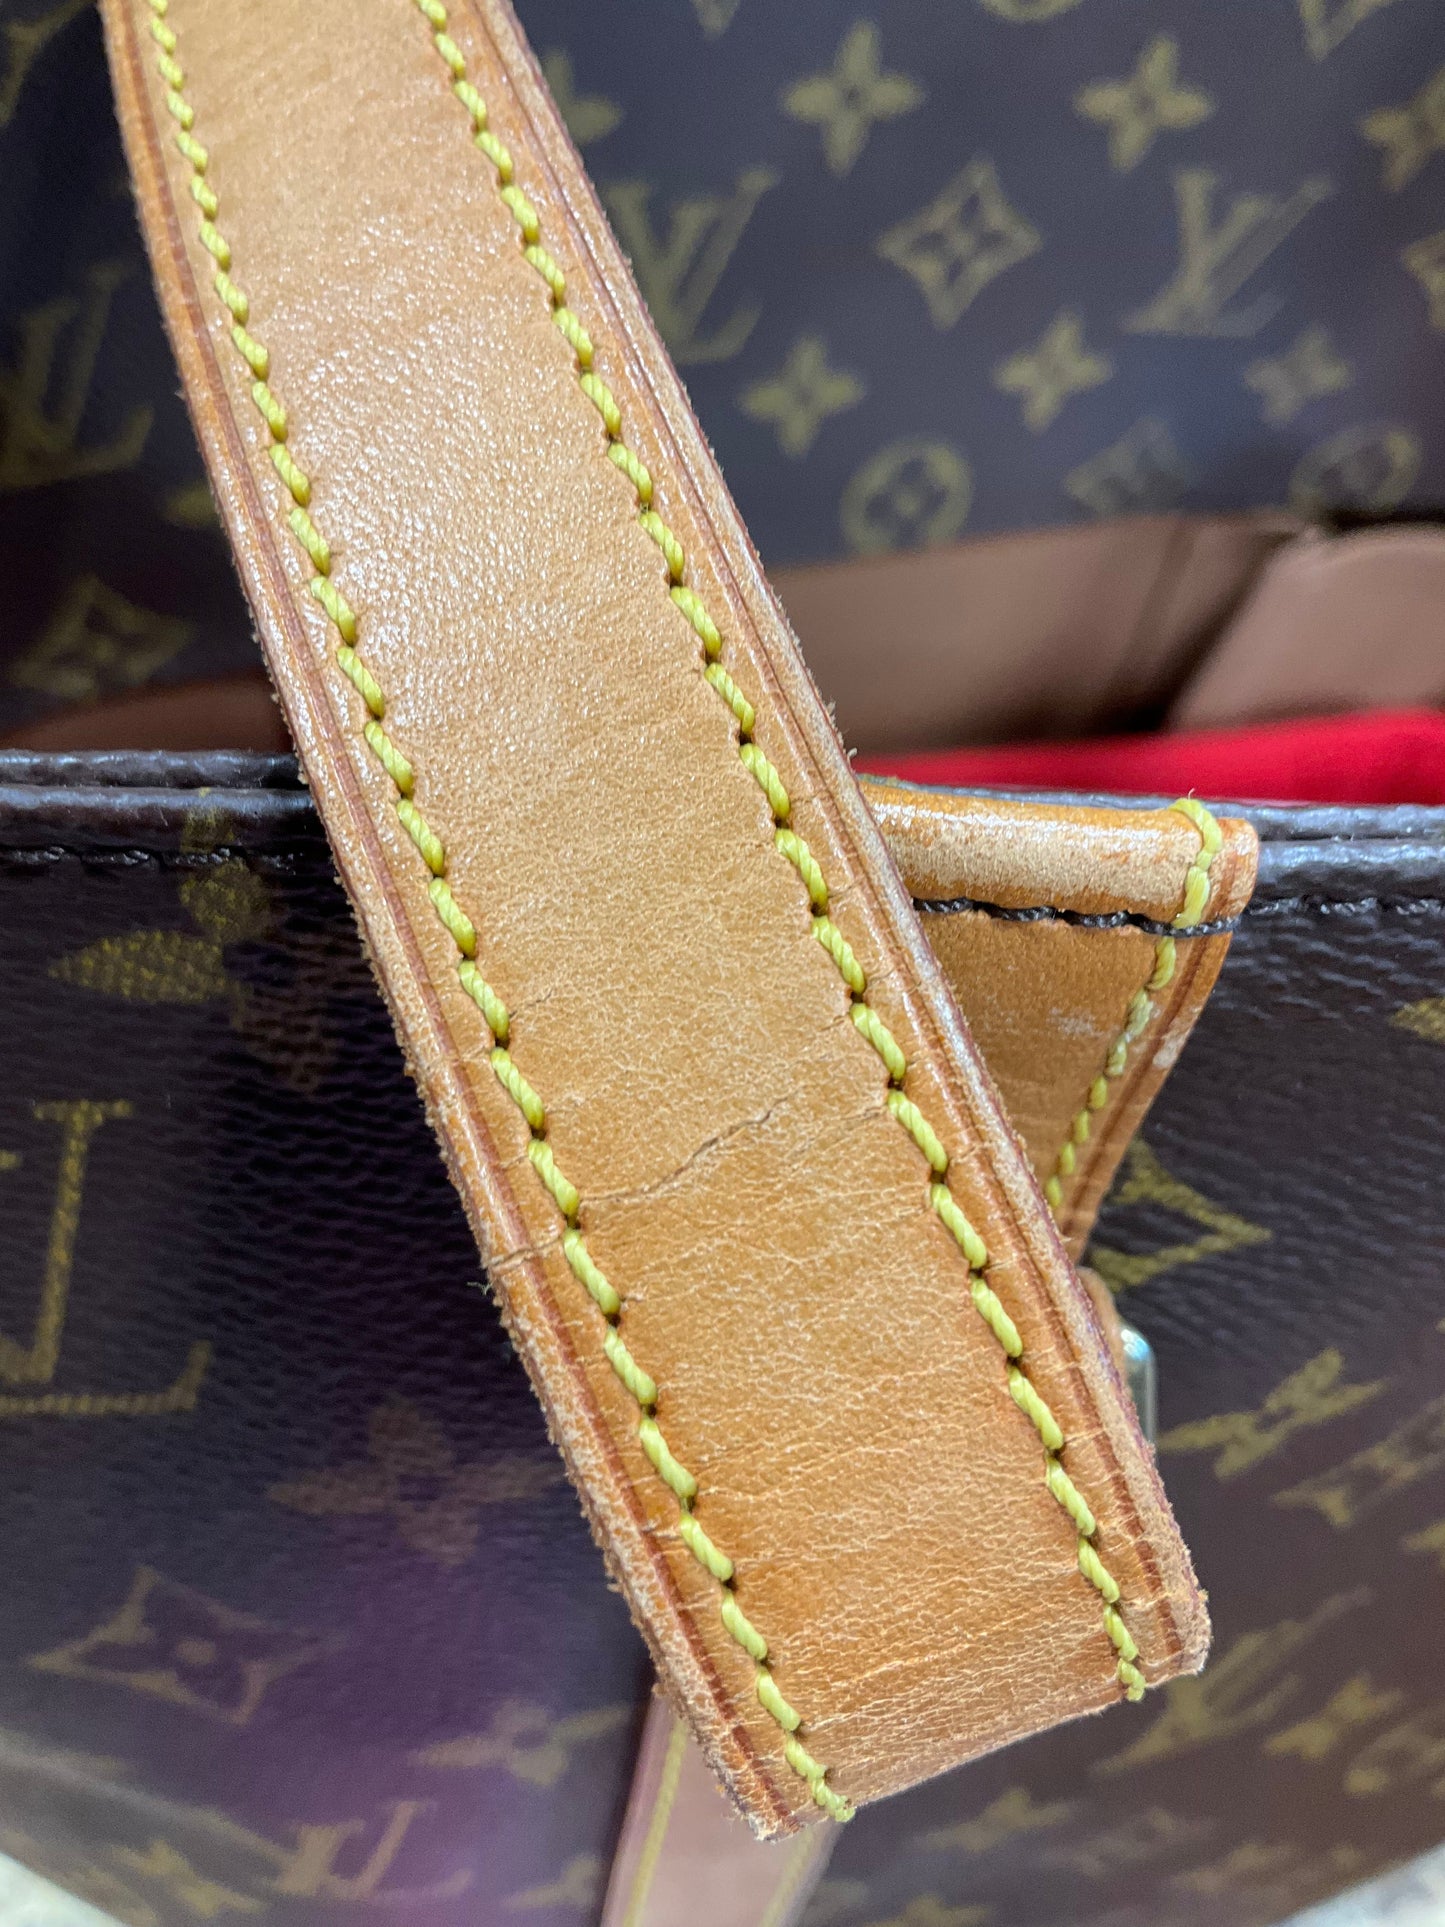 Handbag Luxury Designer Louis Vuitton, Size Large